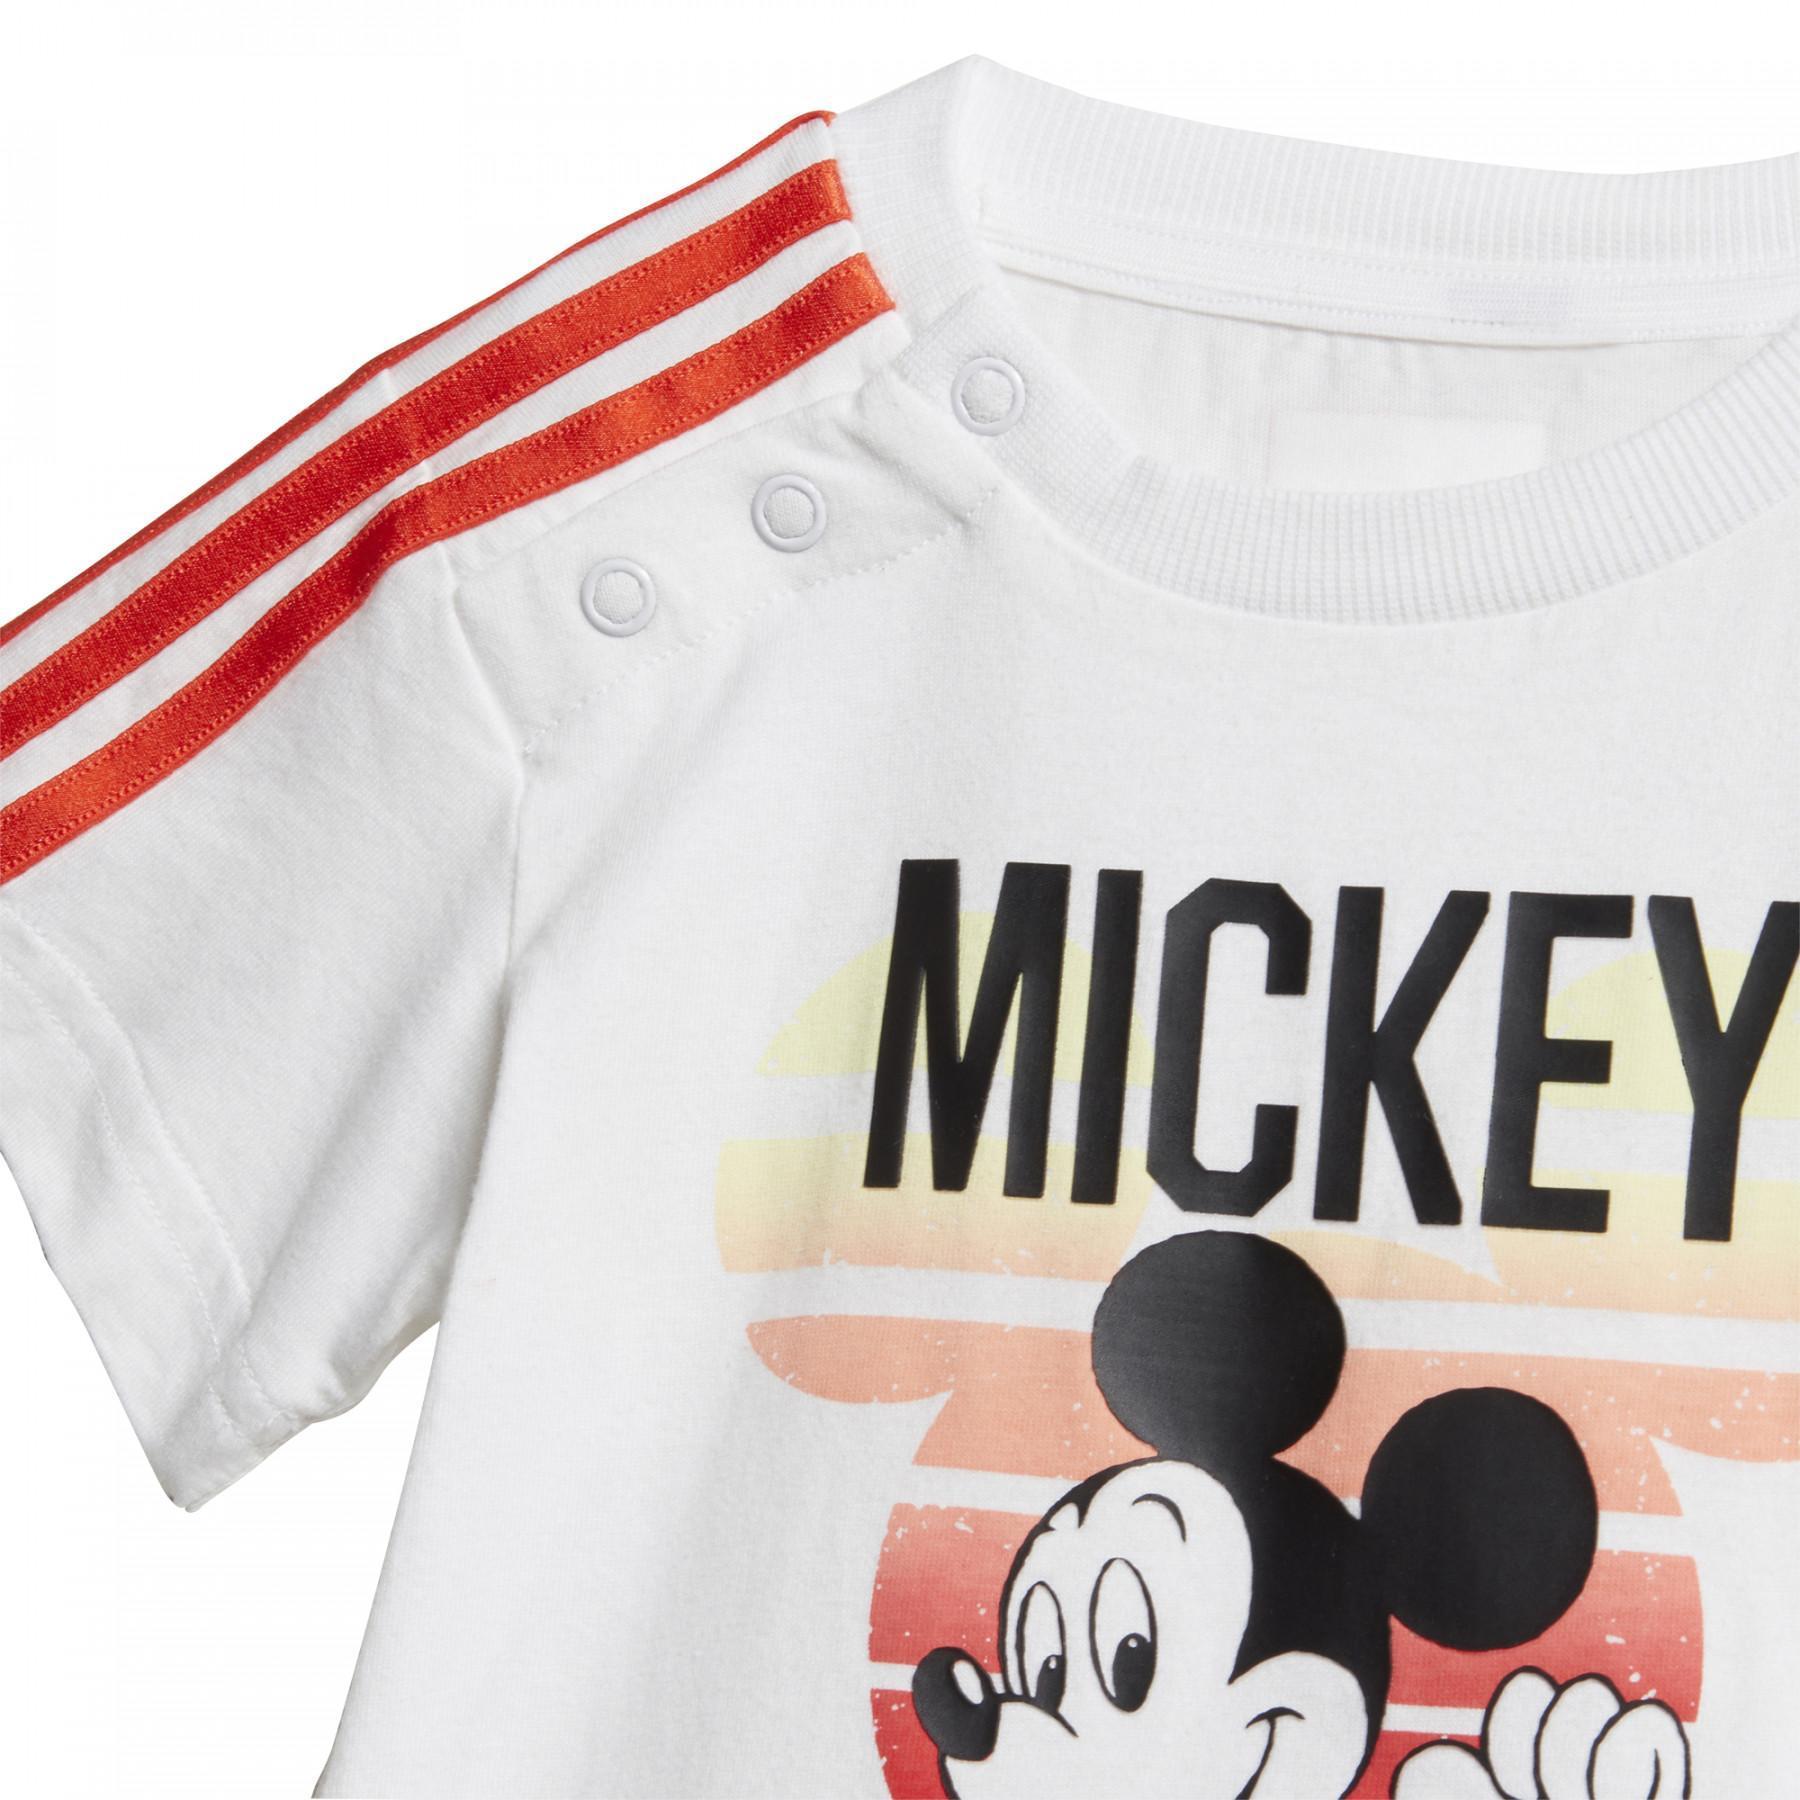 Baby-kit adidas Disney Mickey Mouse Summer